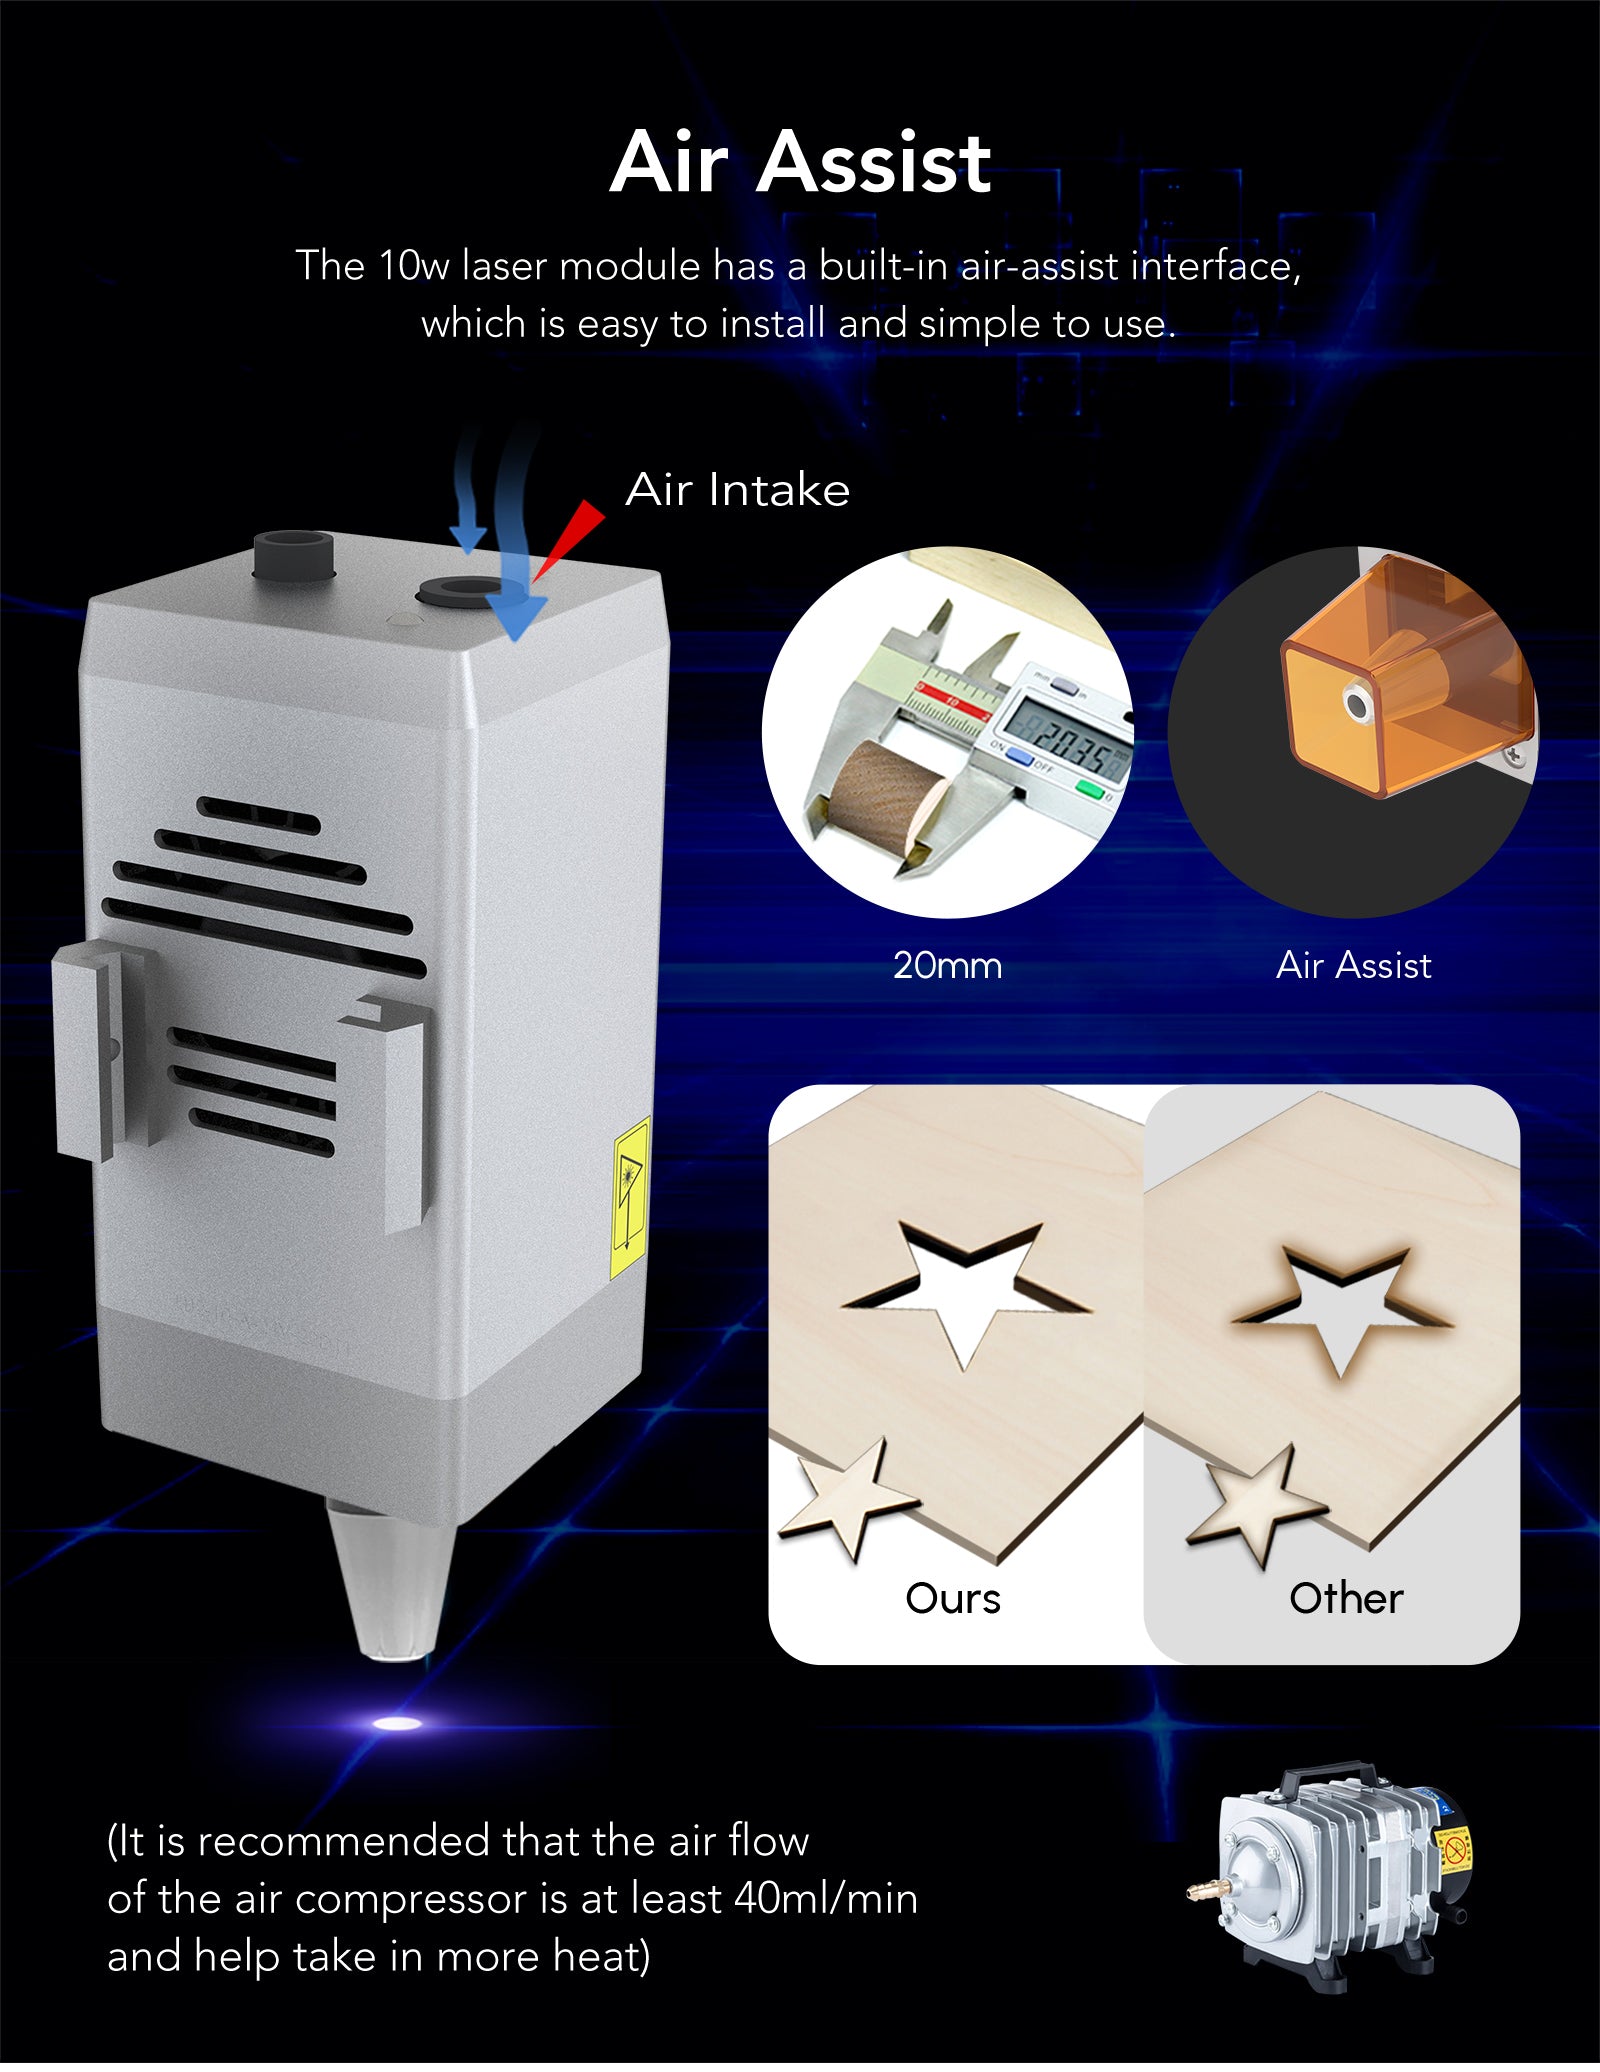 Aufero Laser 2 LU2-10A Laser Engraving Machine - Has A Built-In Air-Assist Interface